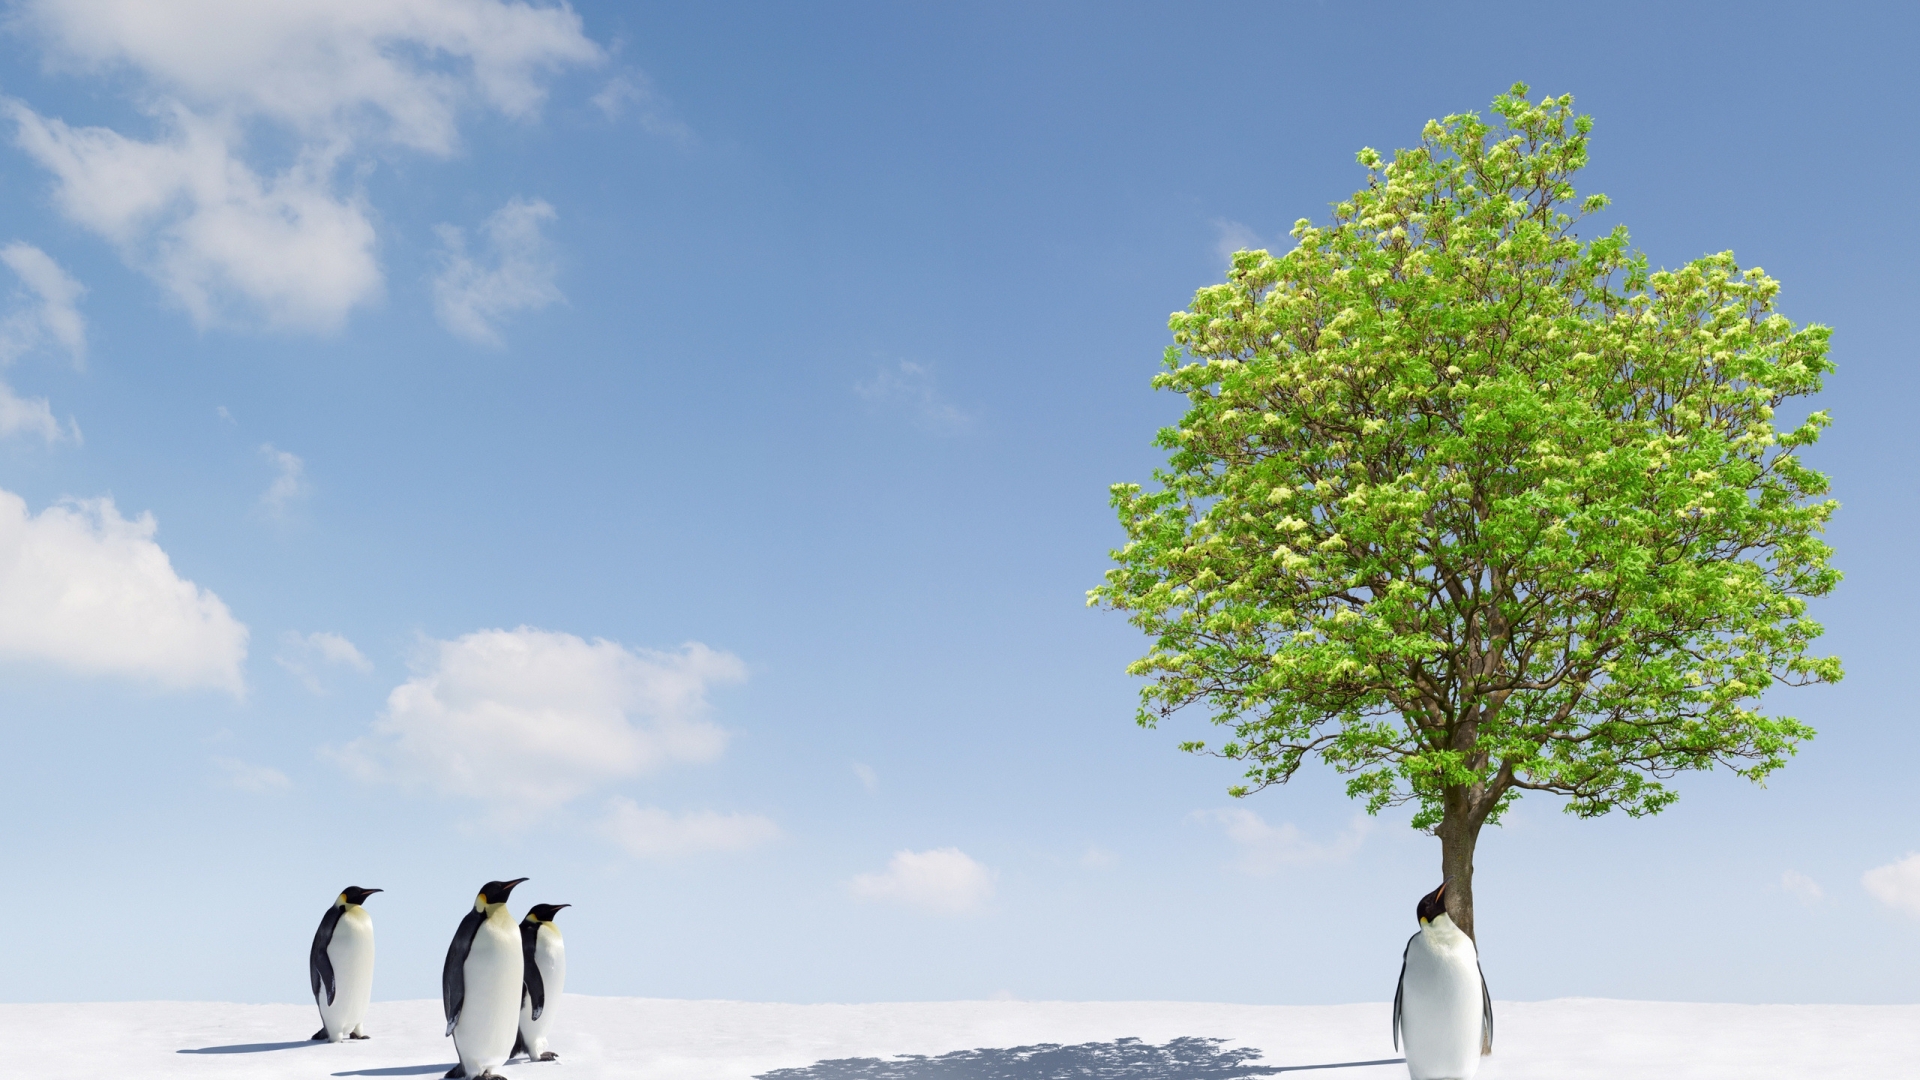  Pinguins Windows Backgrounds